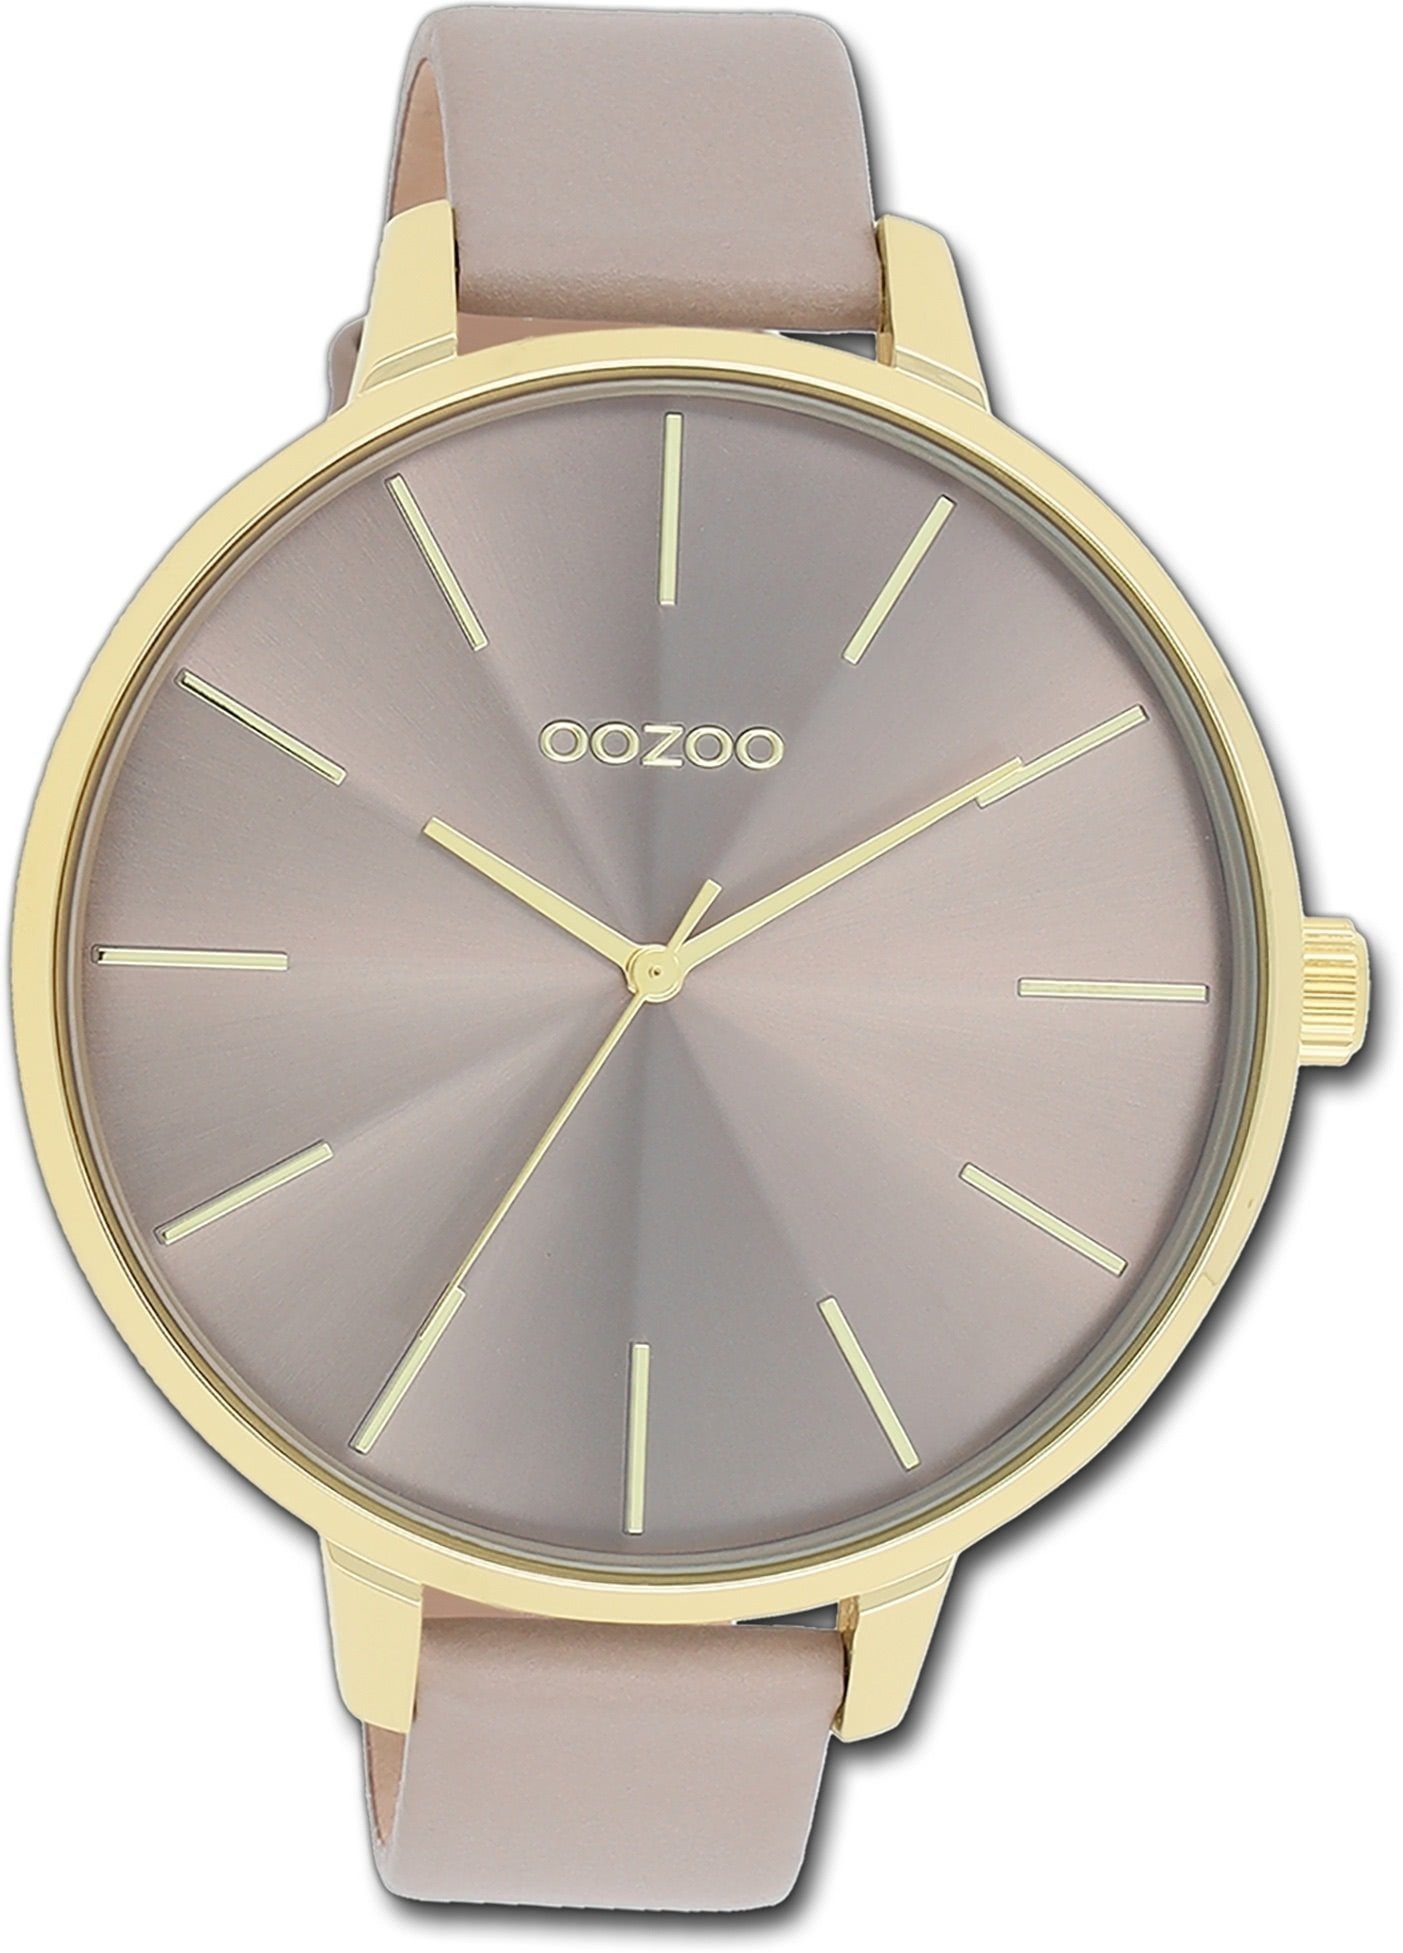 OOZOO Quarzuhr Oozoo Damen Armbanduhr Timepieces, Damenuhr Lederarmband taupe, braun, rundes Gehäuse, extra groß (48mm)